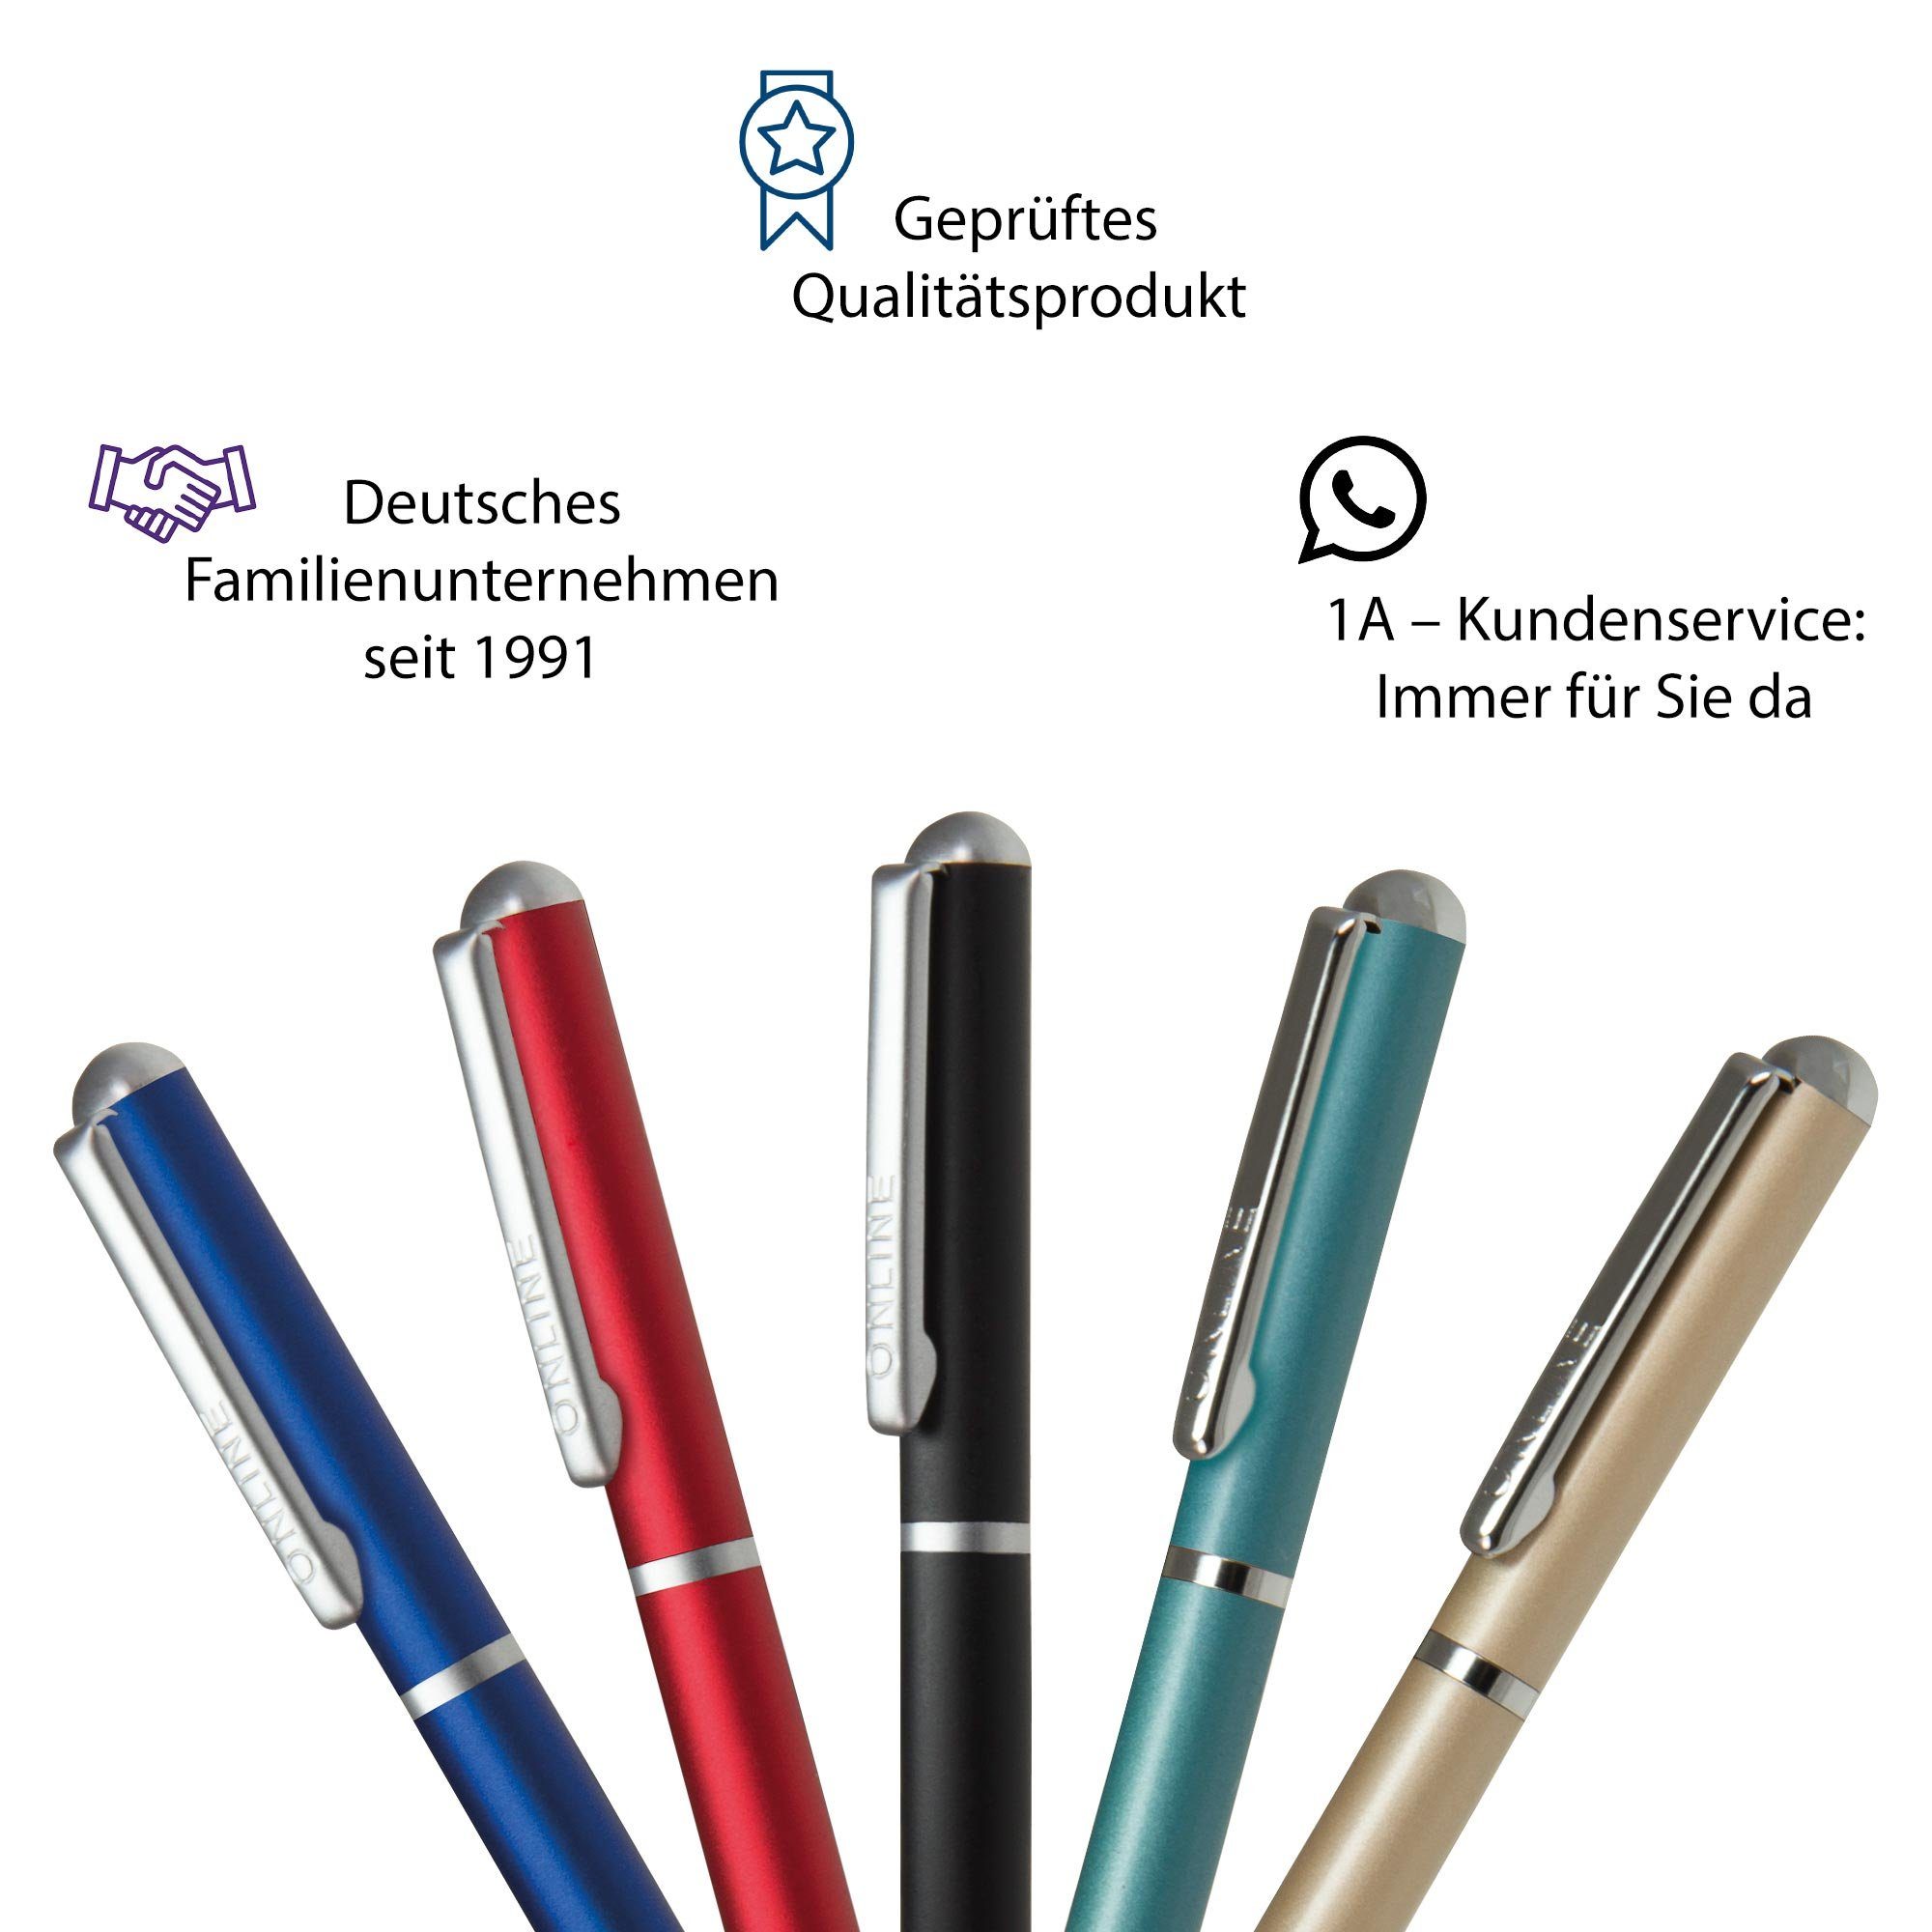 Online Pen Kugelschreiber Mini Portemonnaie Standard Drehkugelschreiber, Champagne schwarzschreibend D1-Qualitätsmine, incl